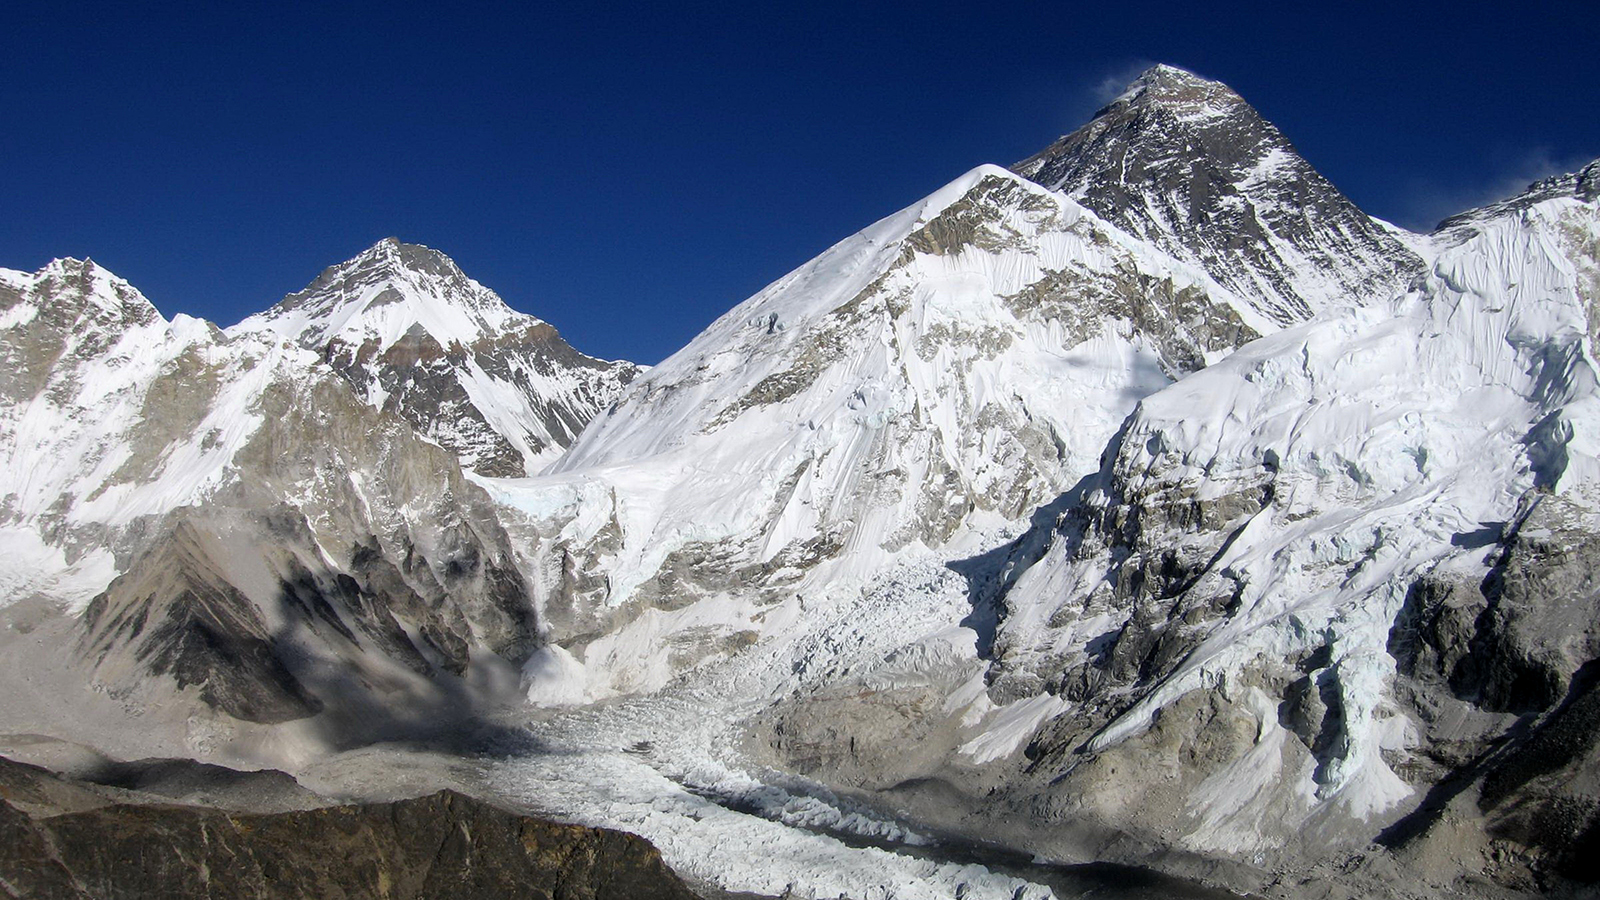 Tak Hanya Indah, Berikut Fakta Tragis di Balik Megahnya Everest